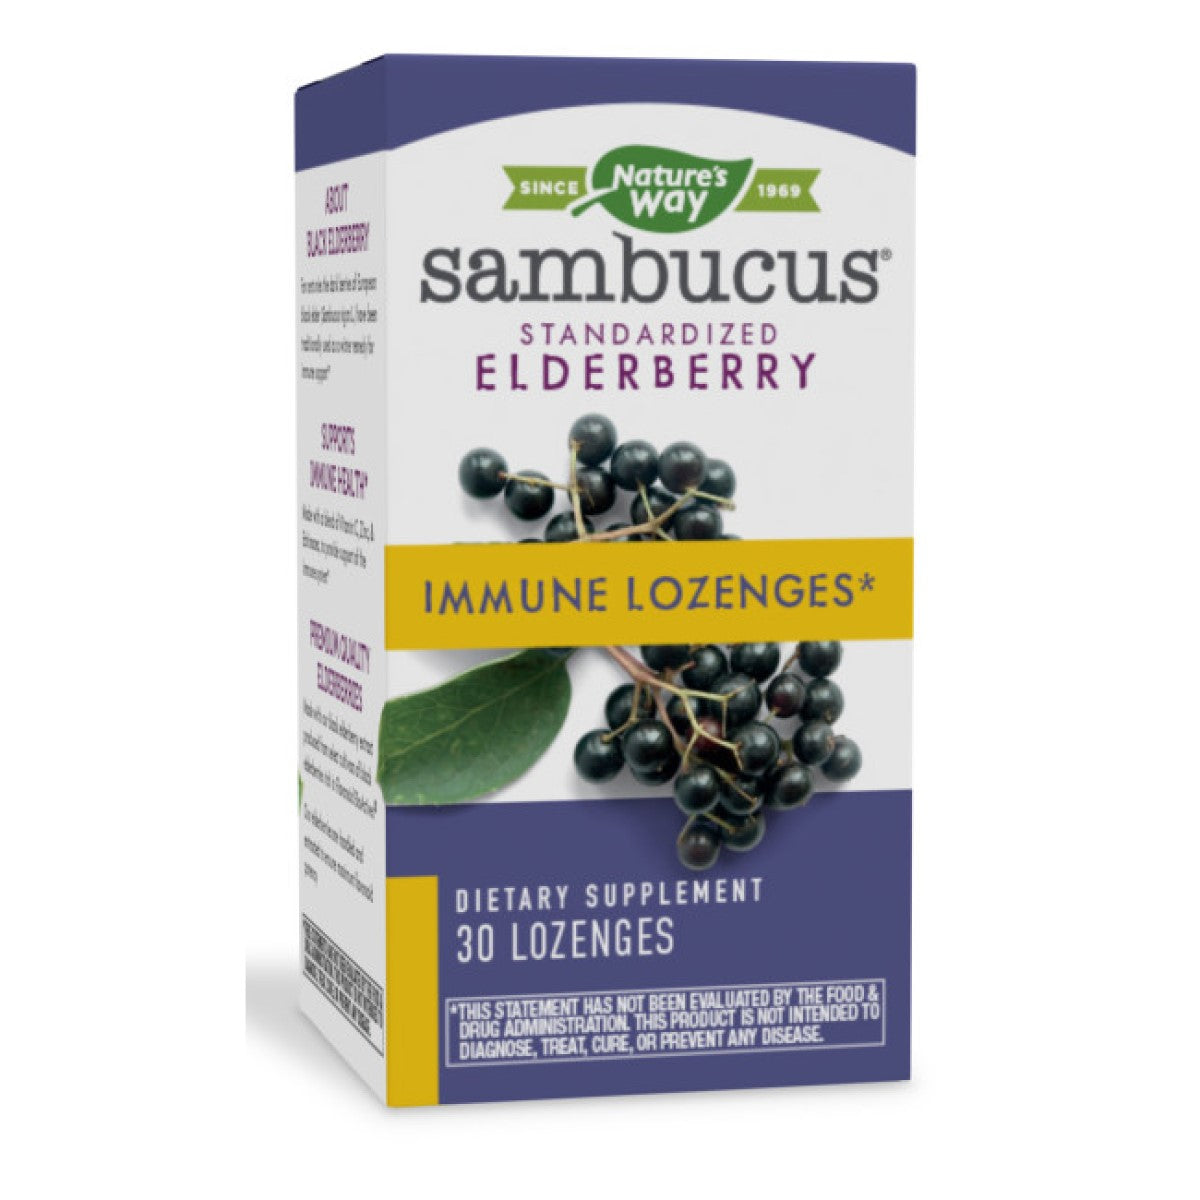 Primary image of Sambucus Immune Lozenges